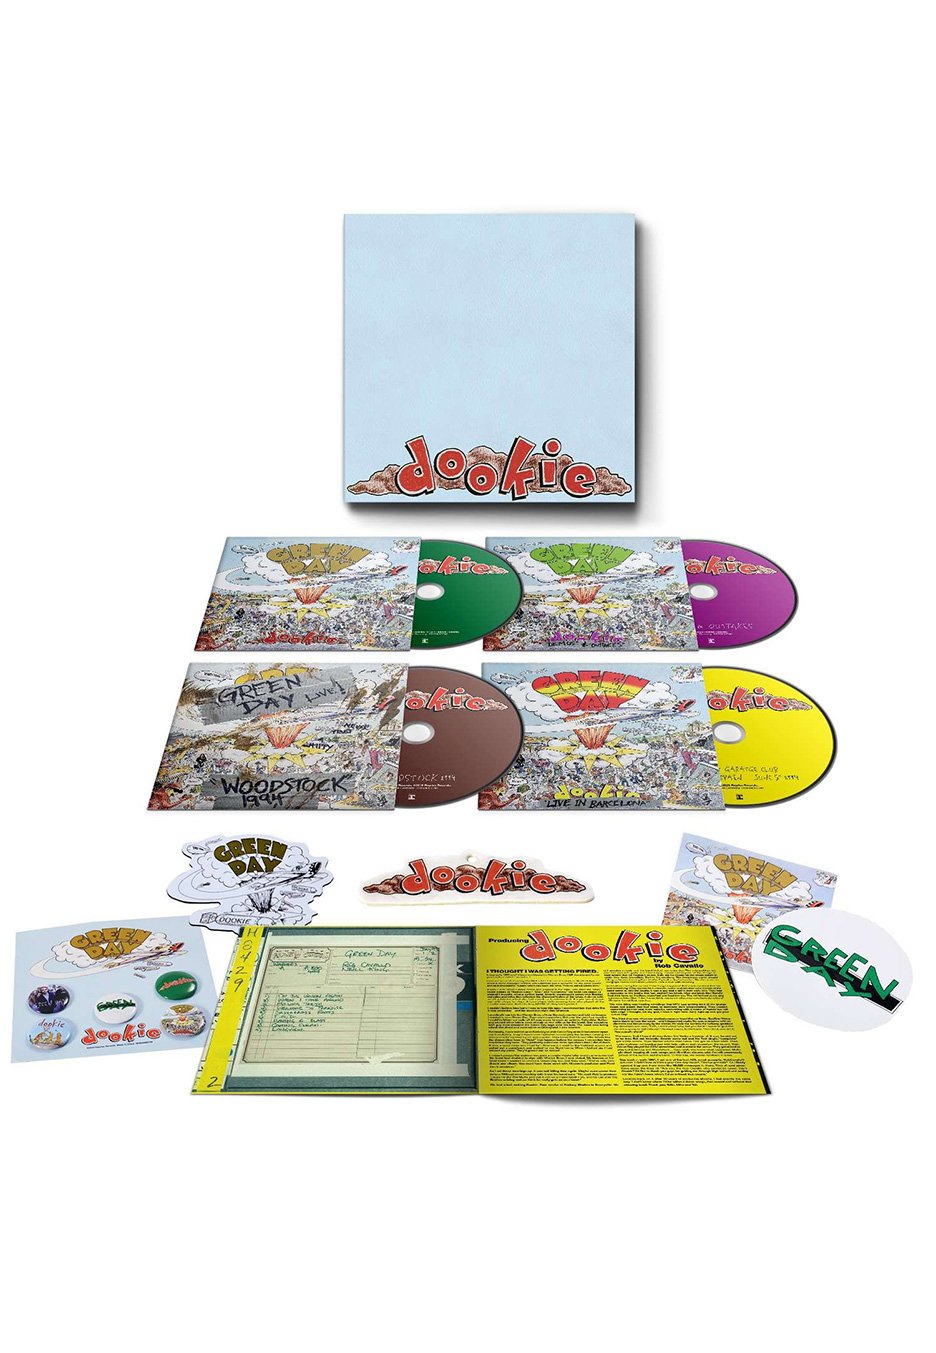 Green Day - Dookie (30th Anniversary) - 4 CD Boxset